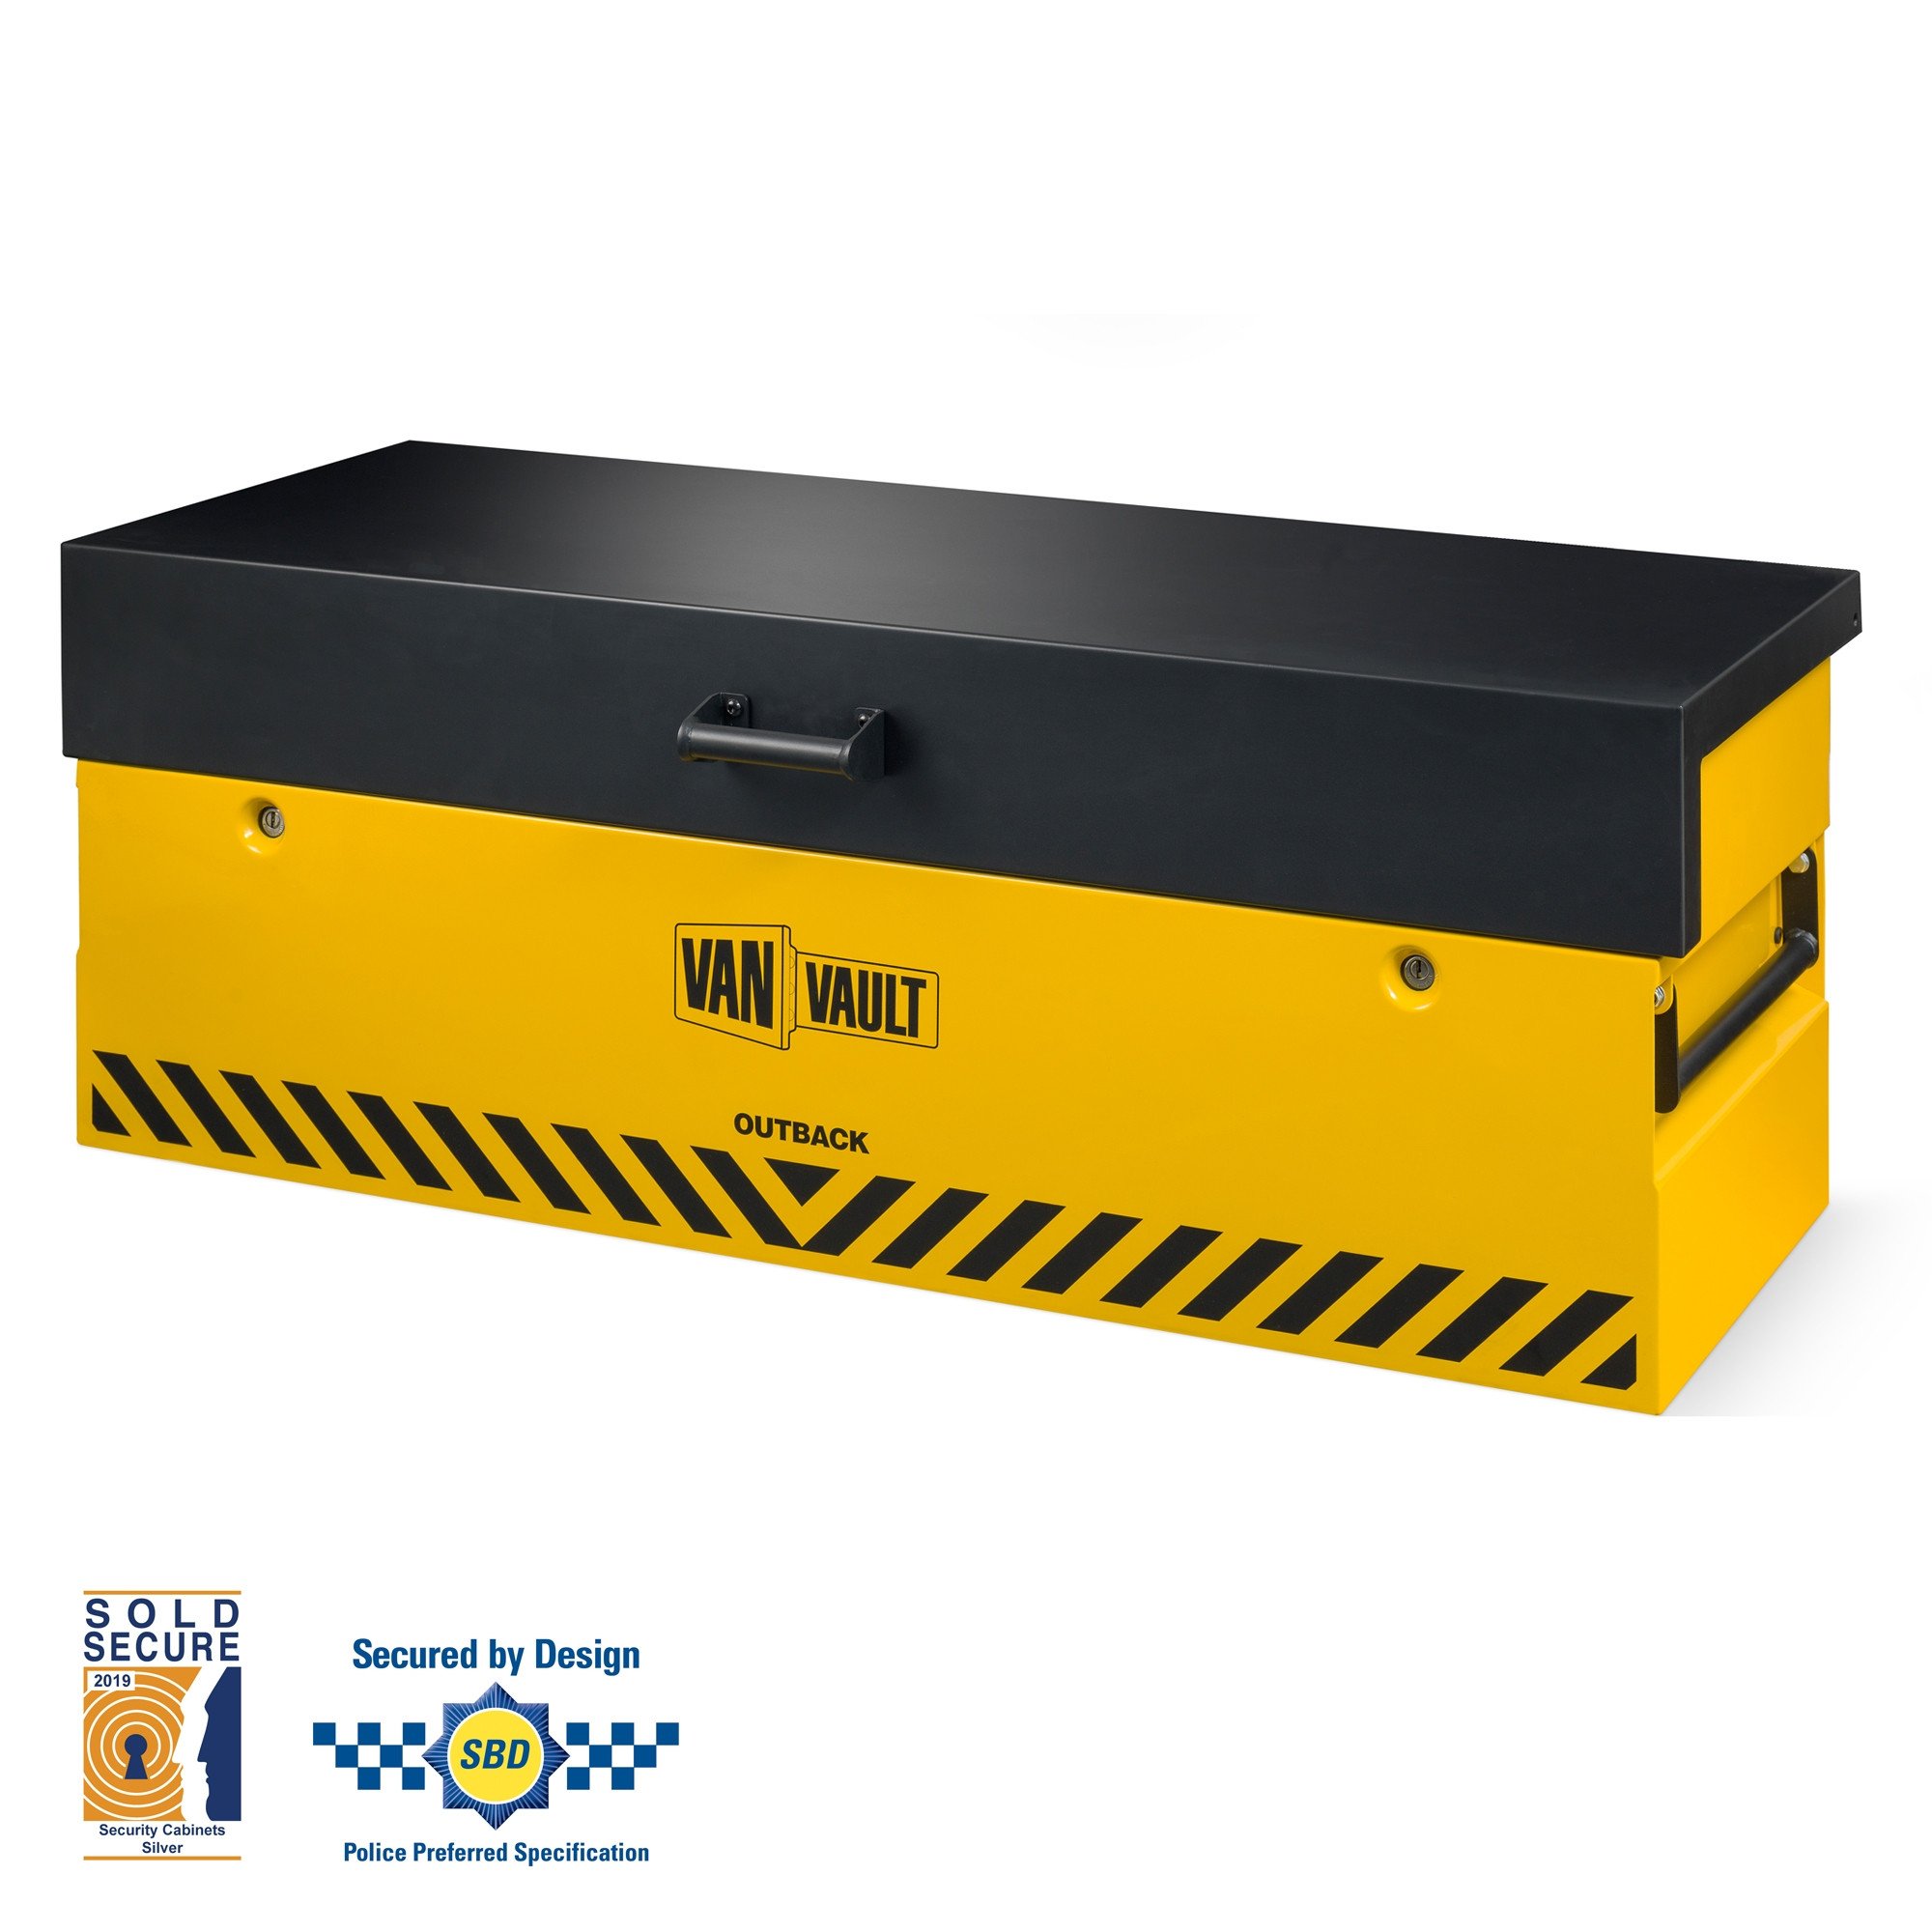 Van Vault S10820 Outback安全存储箱